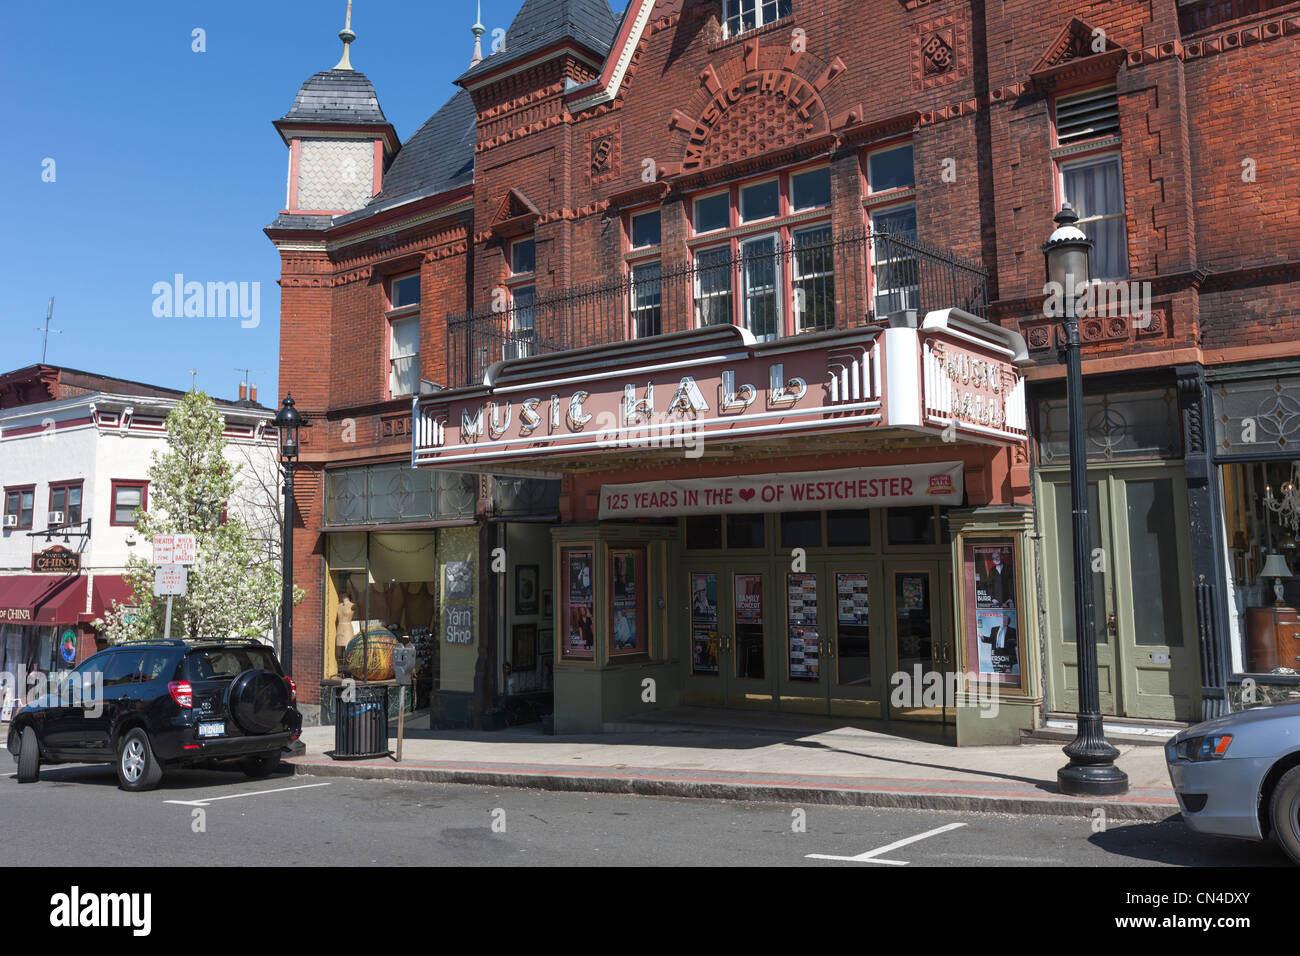 The exterior of the Tarrytown Music Hall on Main Street in Tarrytown, New York. Stock Photo